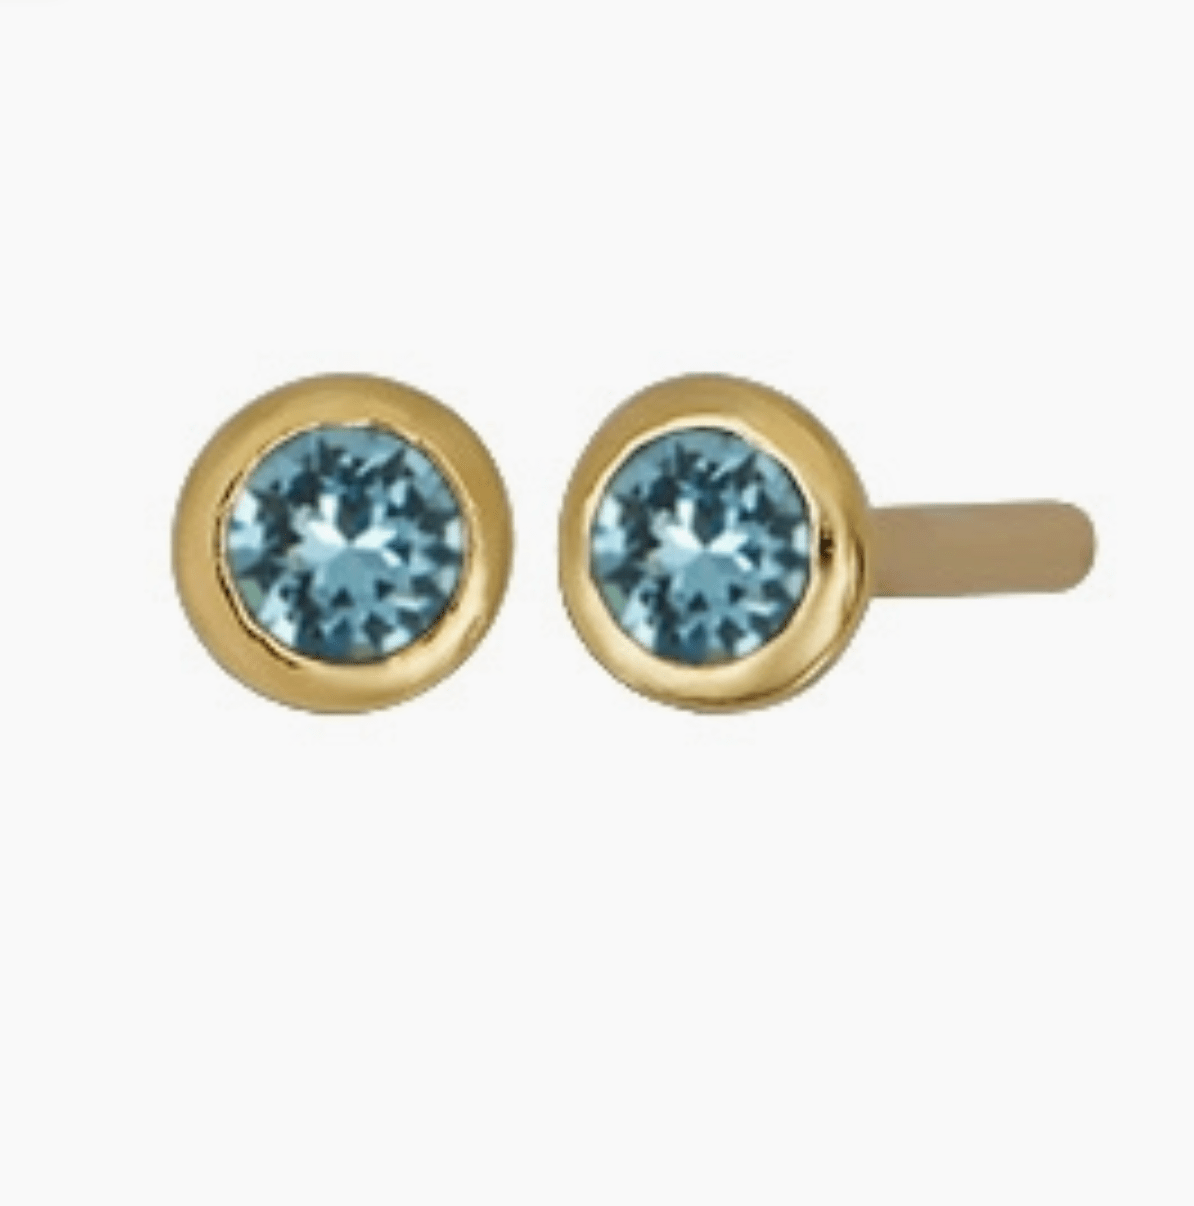 Birthstone Stud Earrings in Gold // Choose Stone Earrings